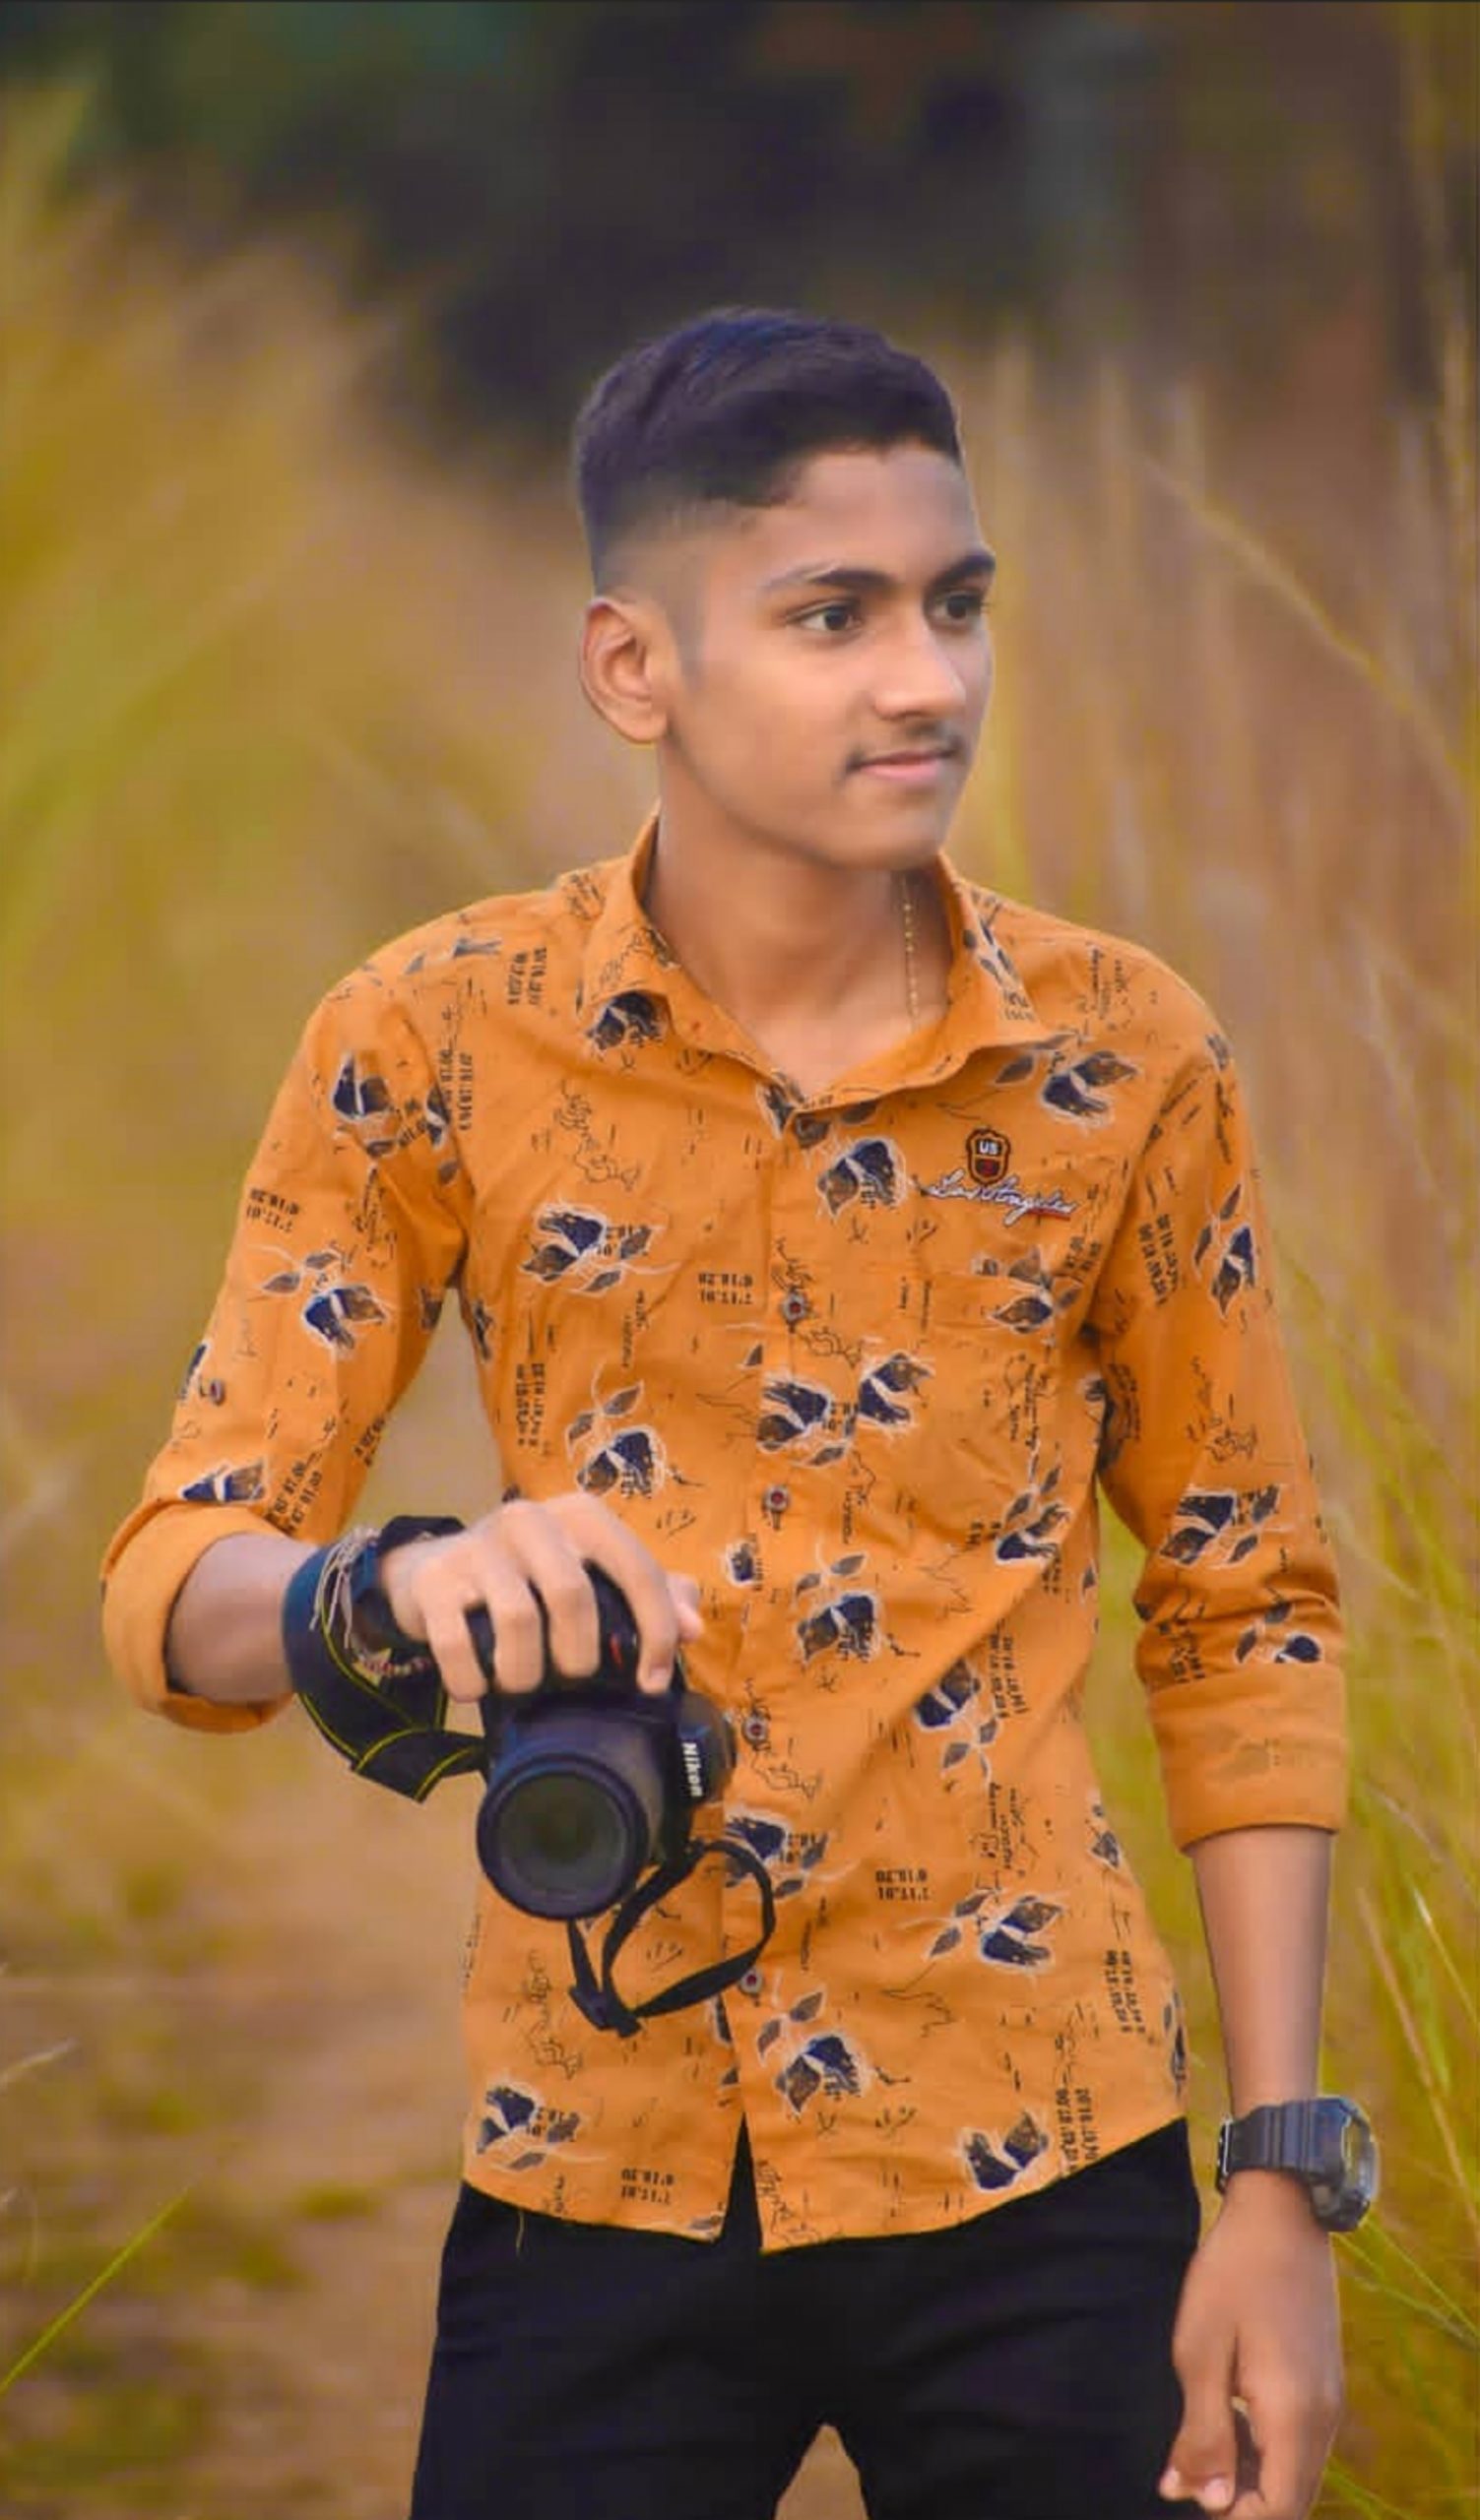 Boy posing with Camera